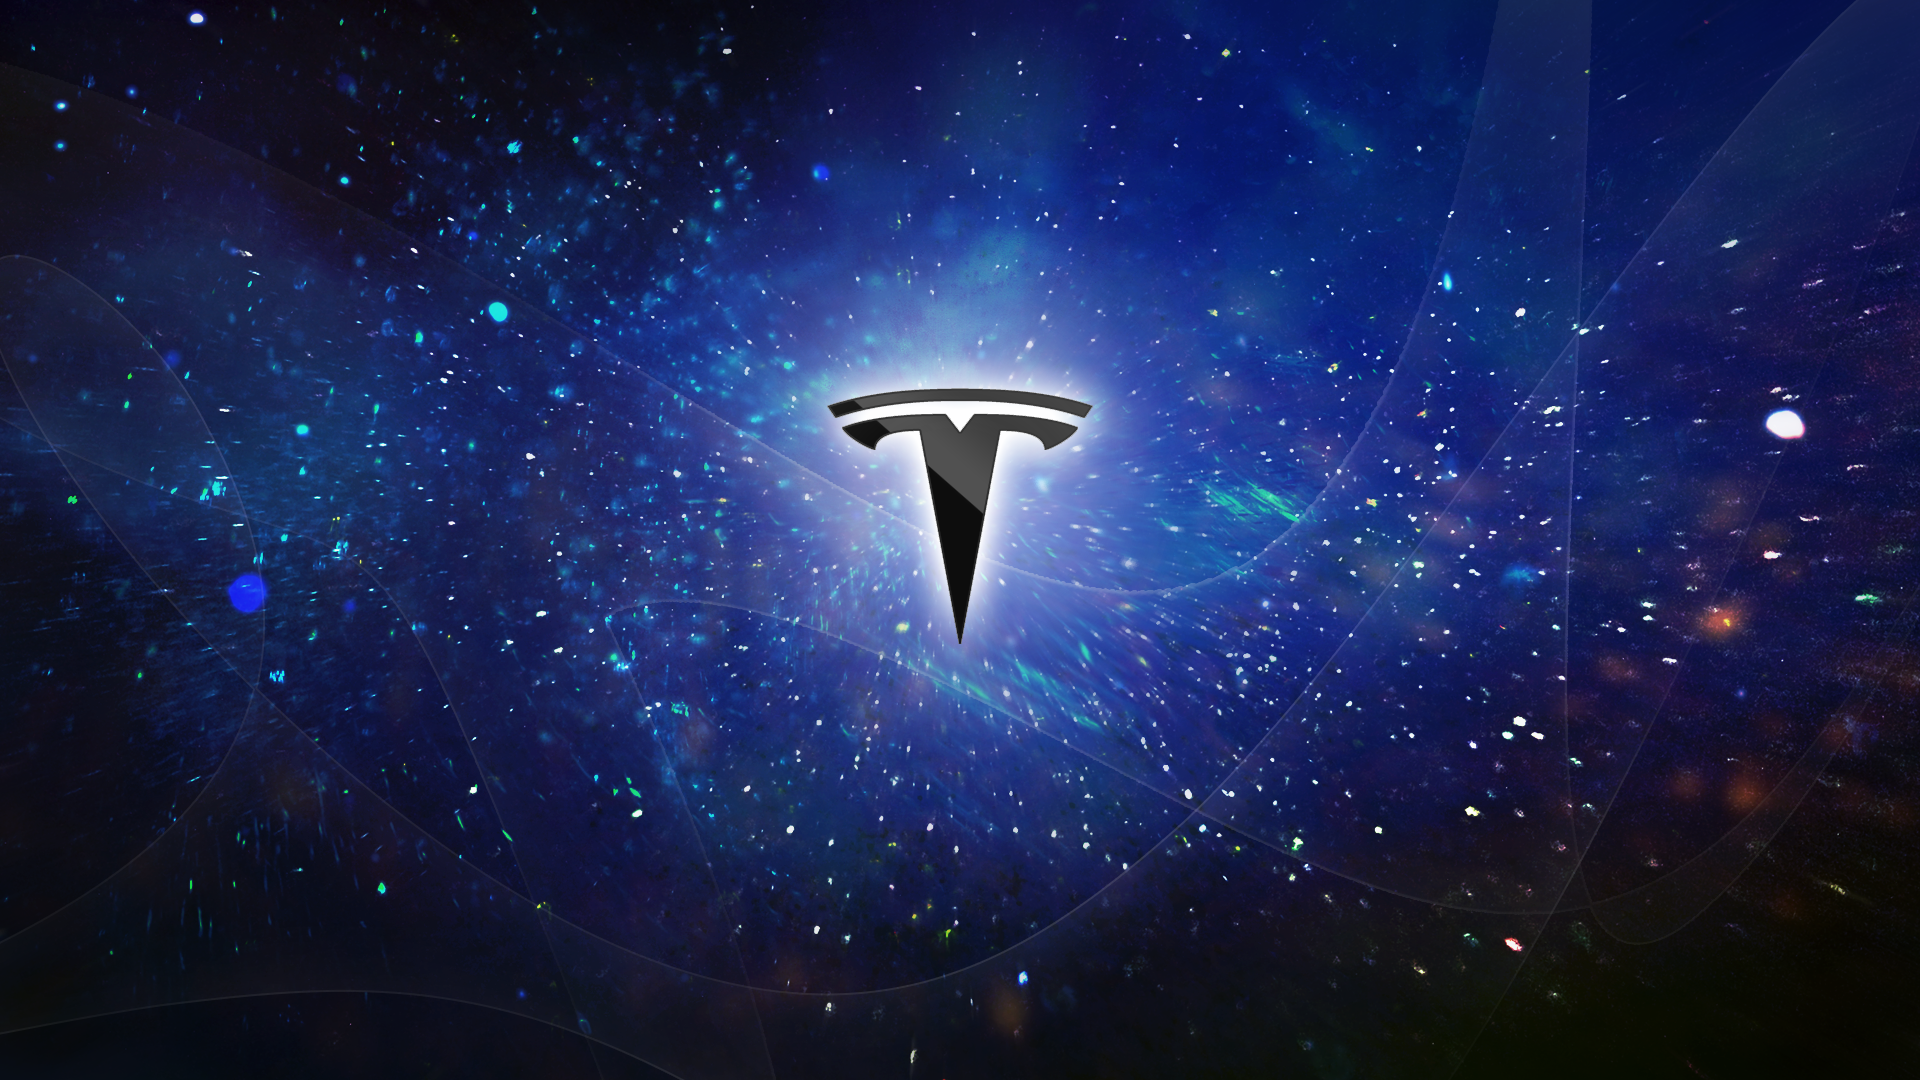 Tesla Hintergrundbild 1920x1080. Tesla Motors logo General 1920x1080. Reiseziele, Projekte, Reisen